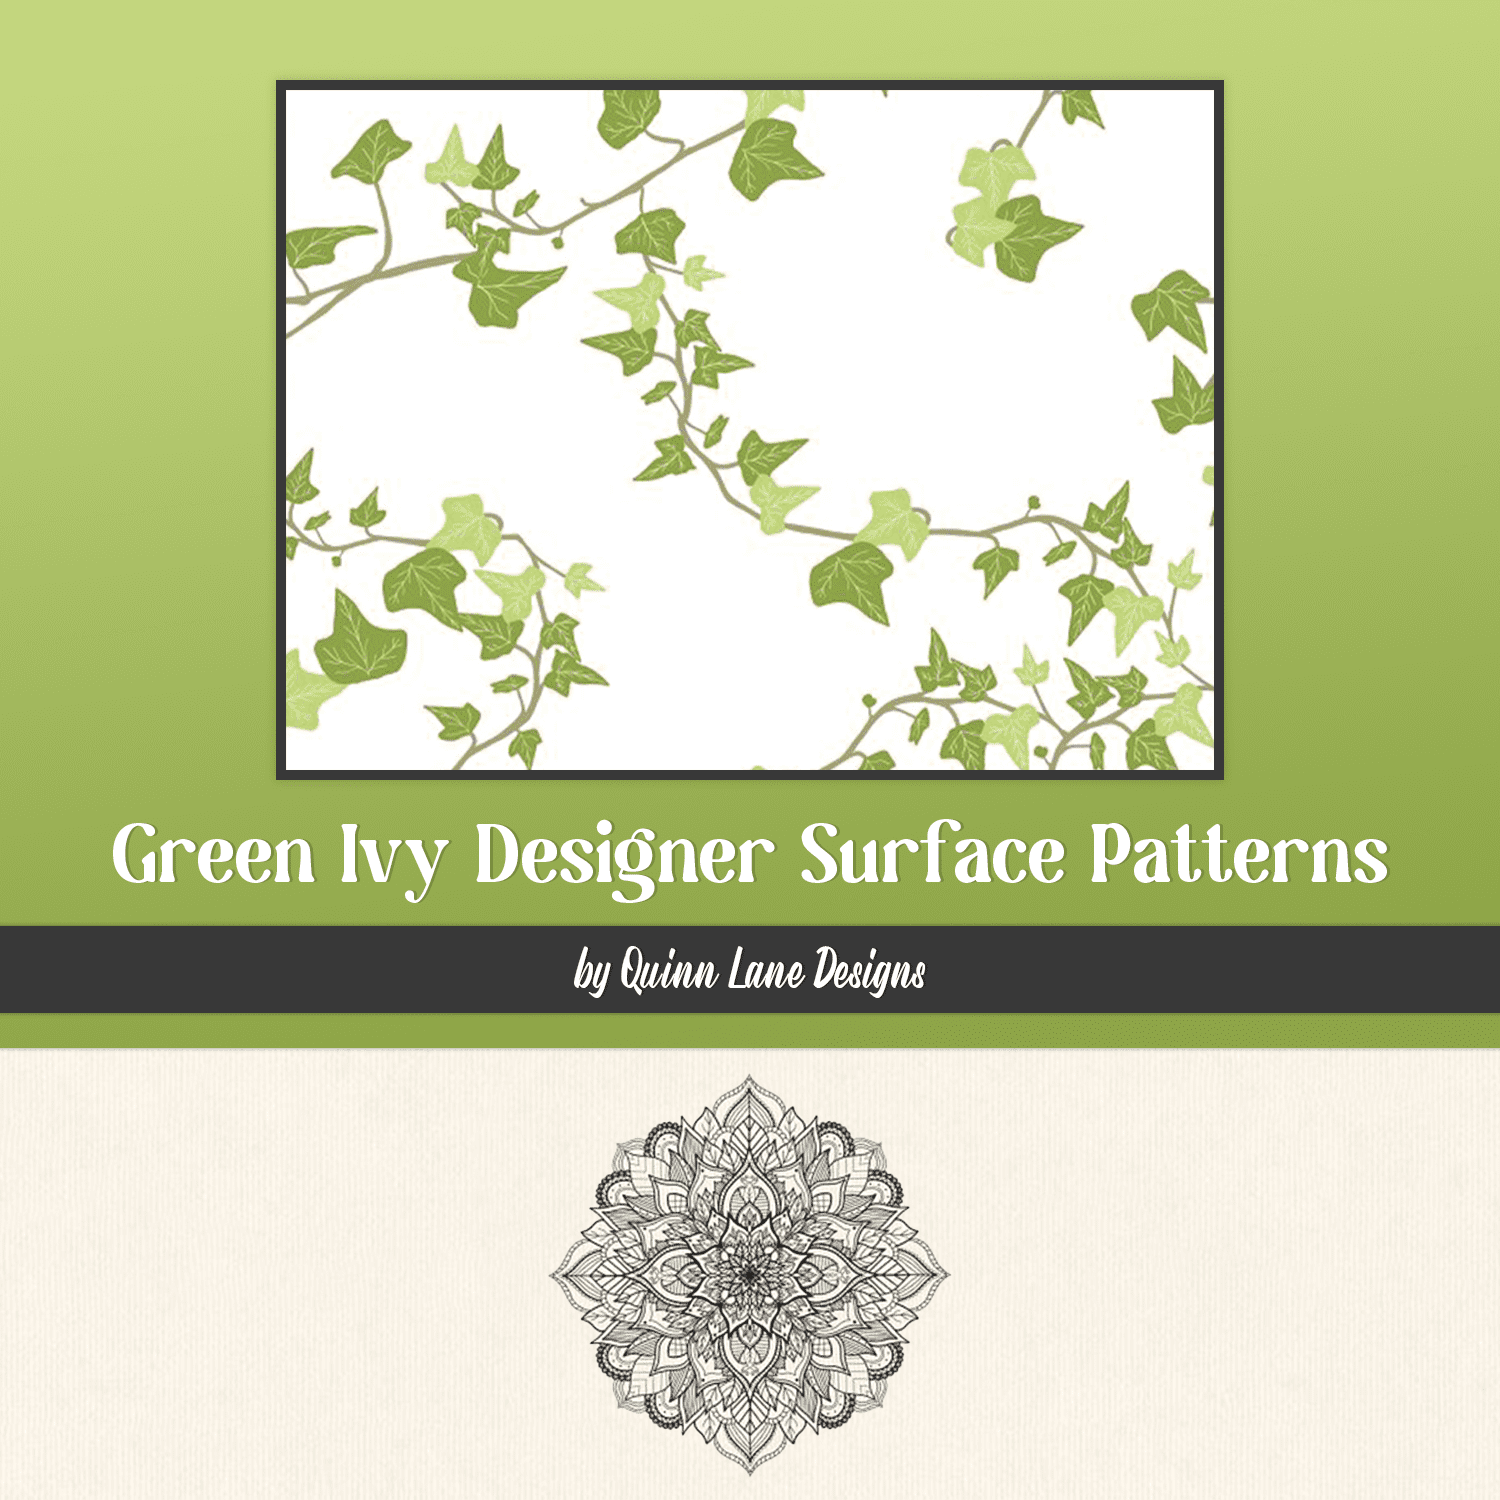 Green Ivy Designer Surface Patterns.